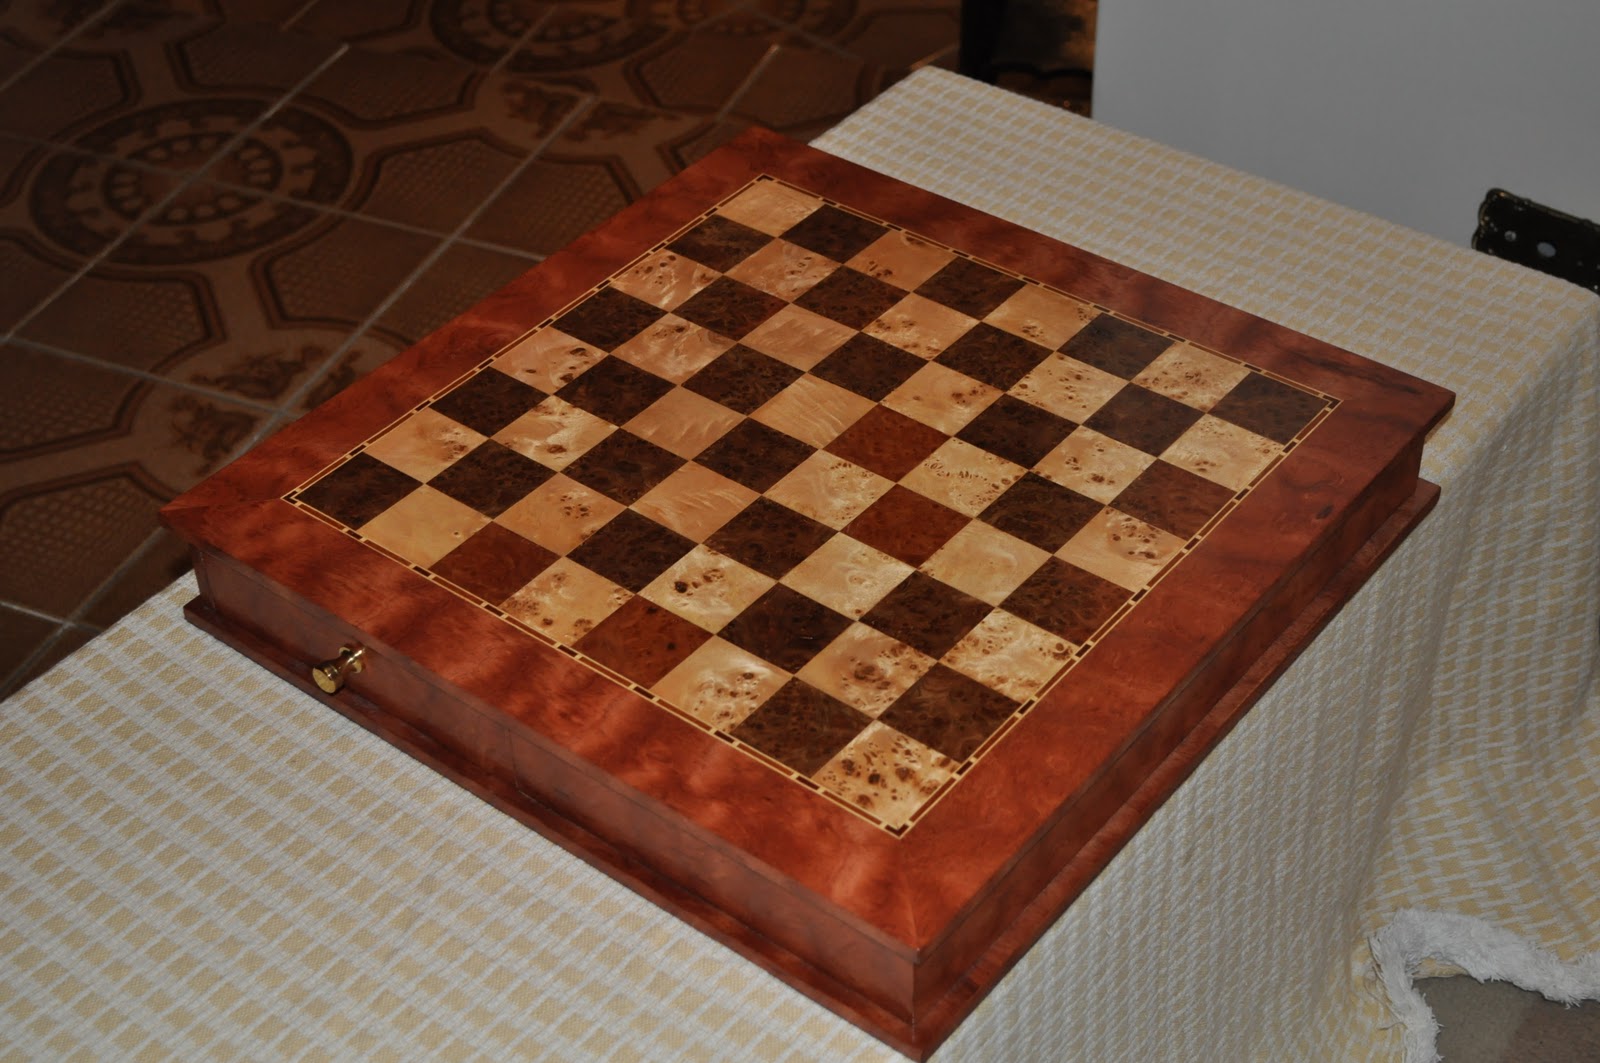 Tabuleiro de Xadrez artesanal de Madeira feito em Marchetaria